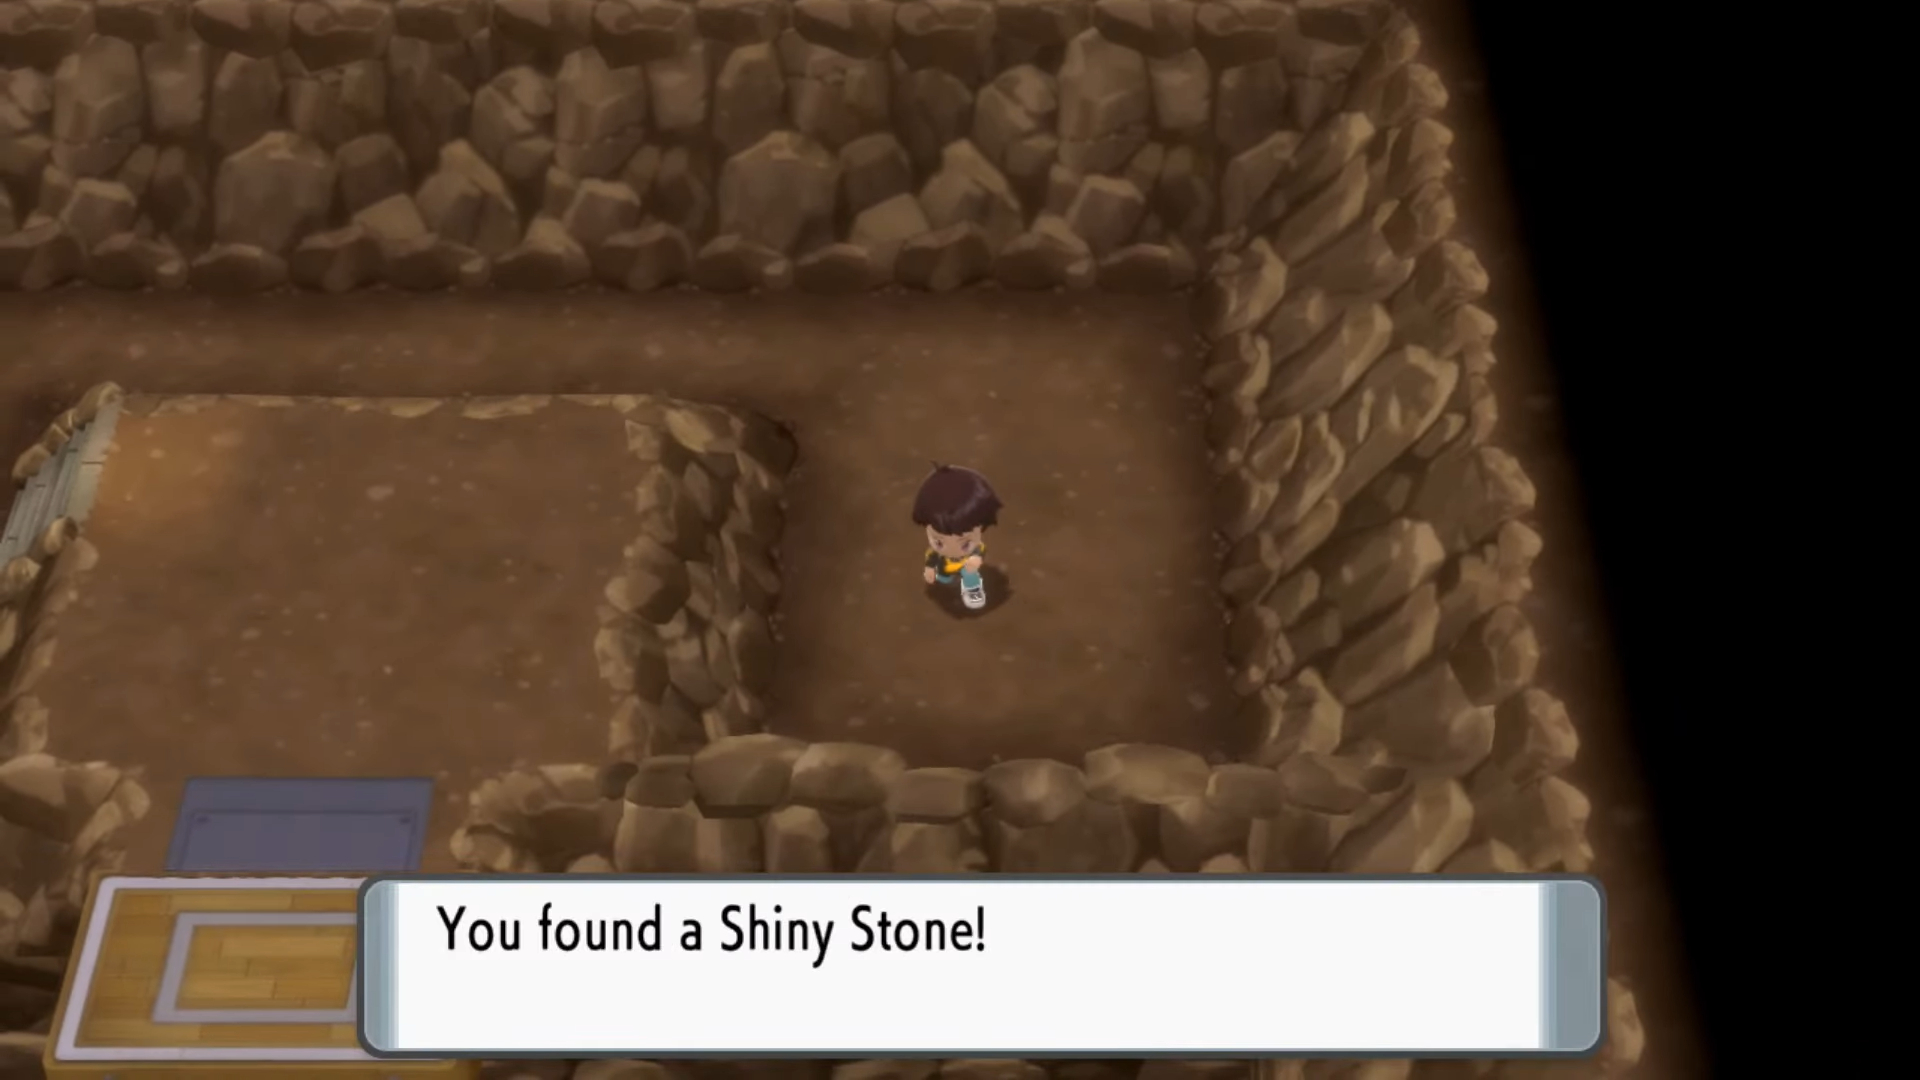 dawn stone pokemon｜TikTok Search